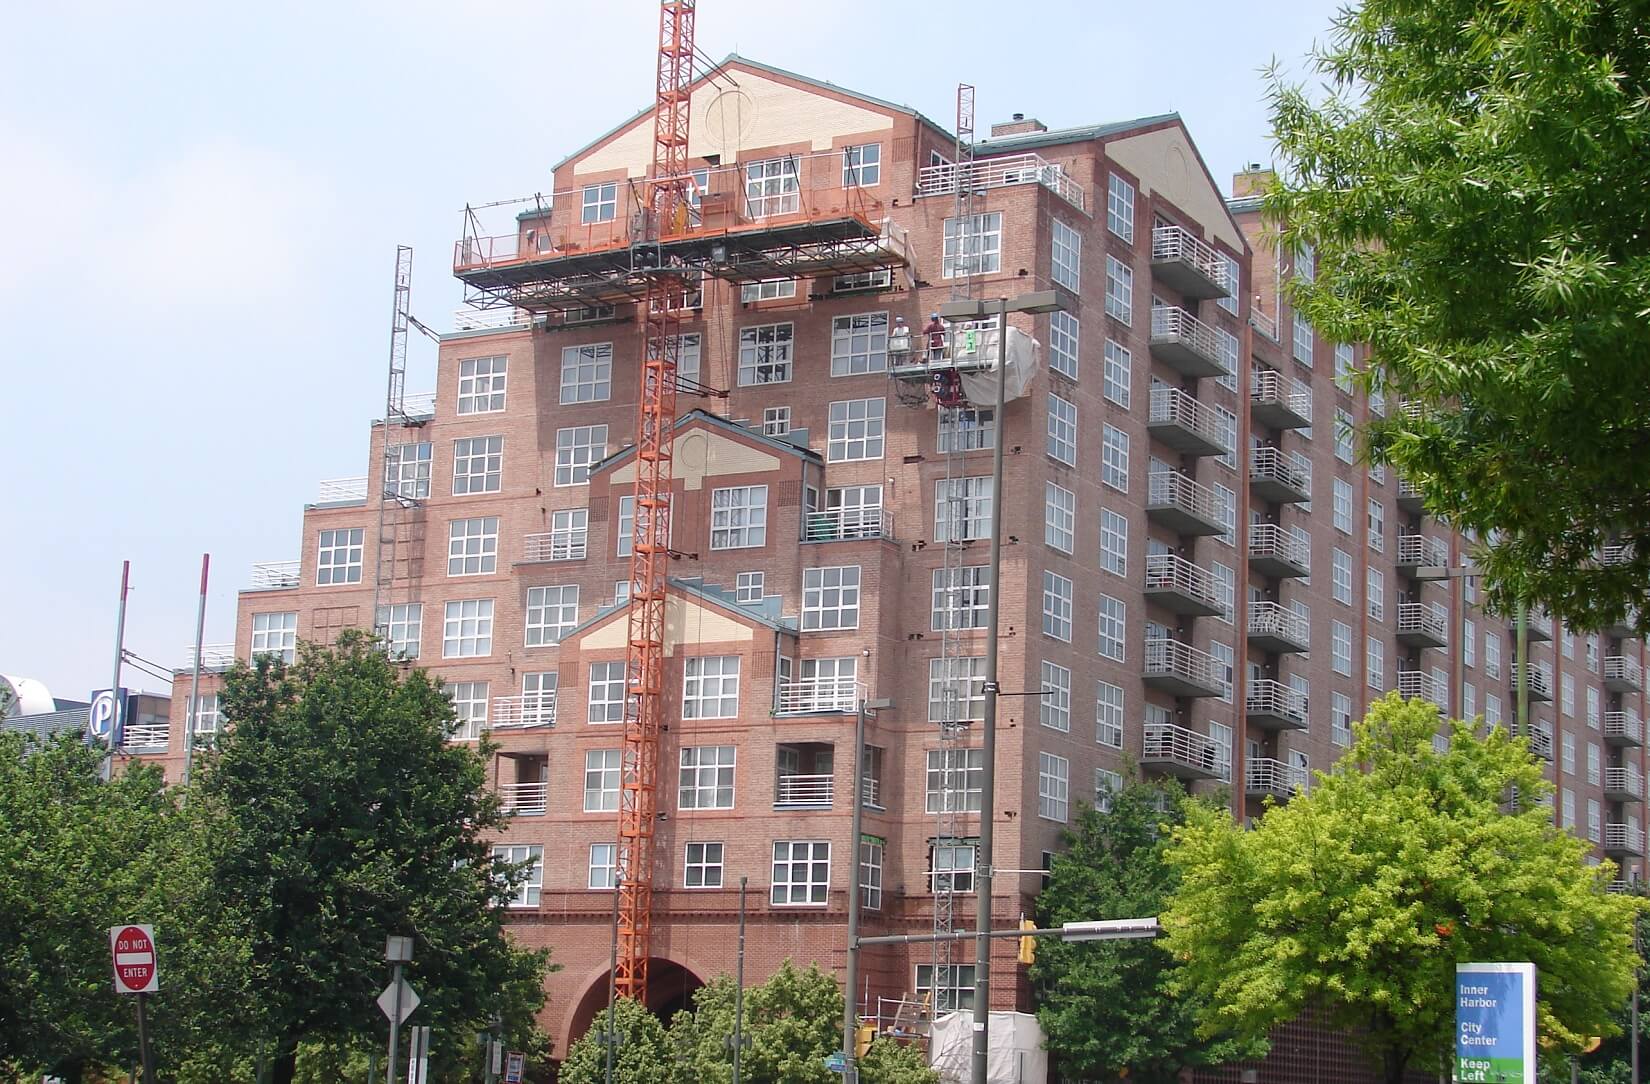 HIstorical Restoration on a building